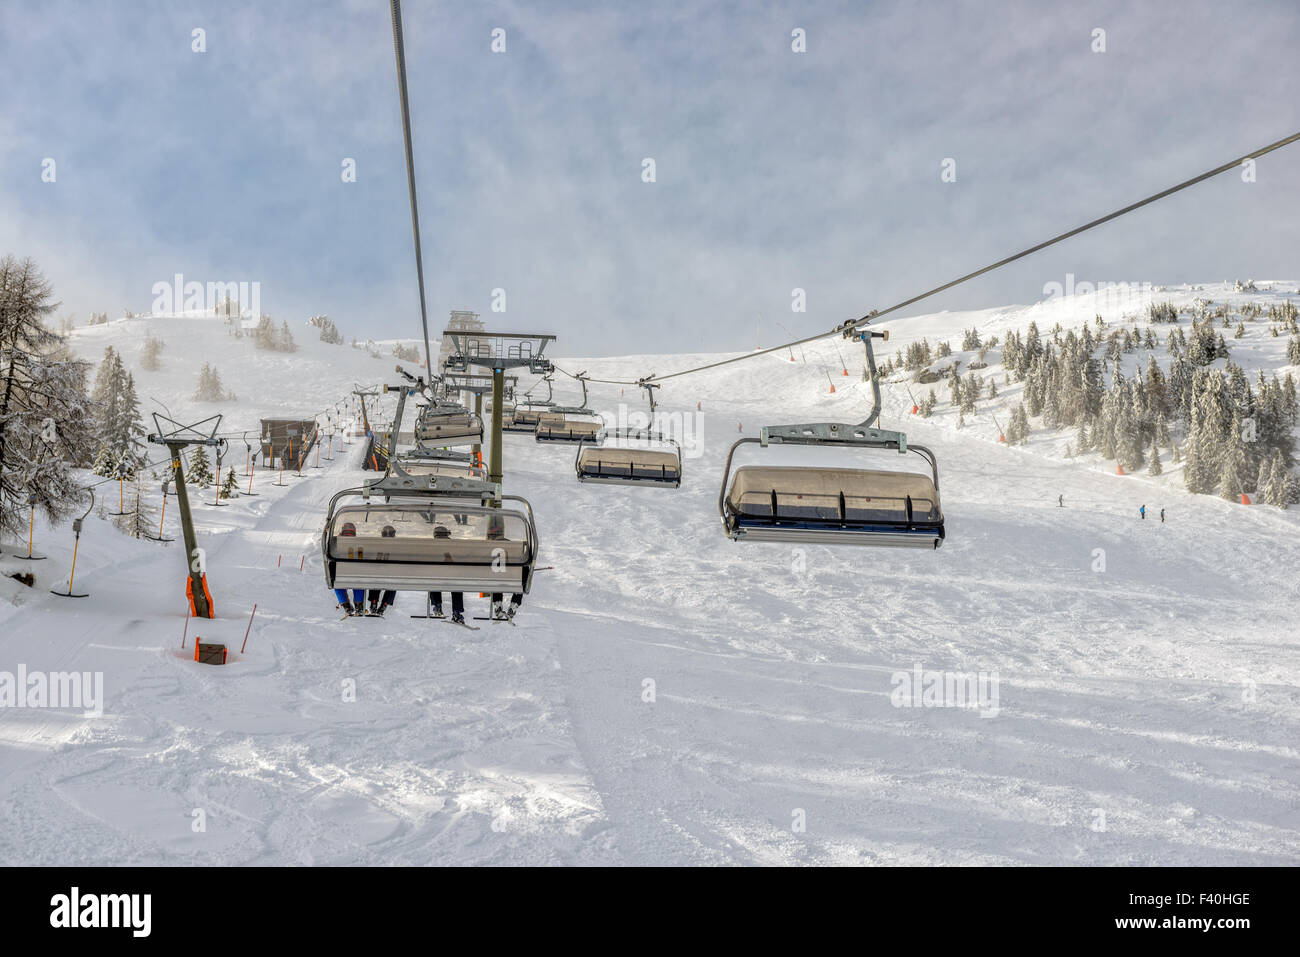 Skilift at alpine ski resort Stock Photo